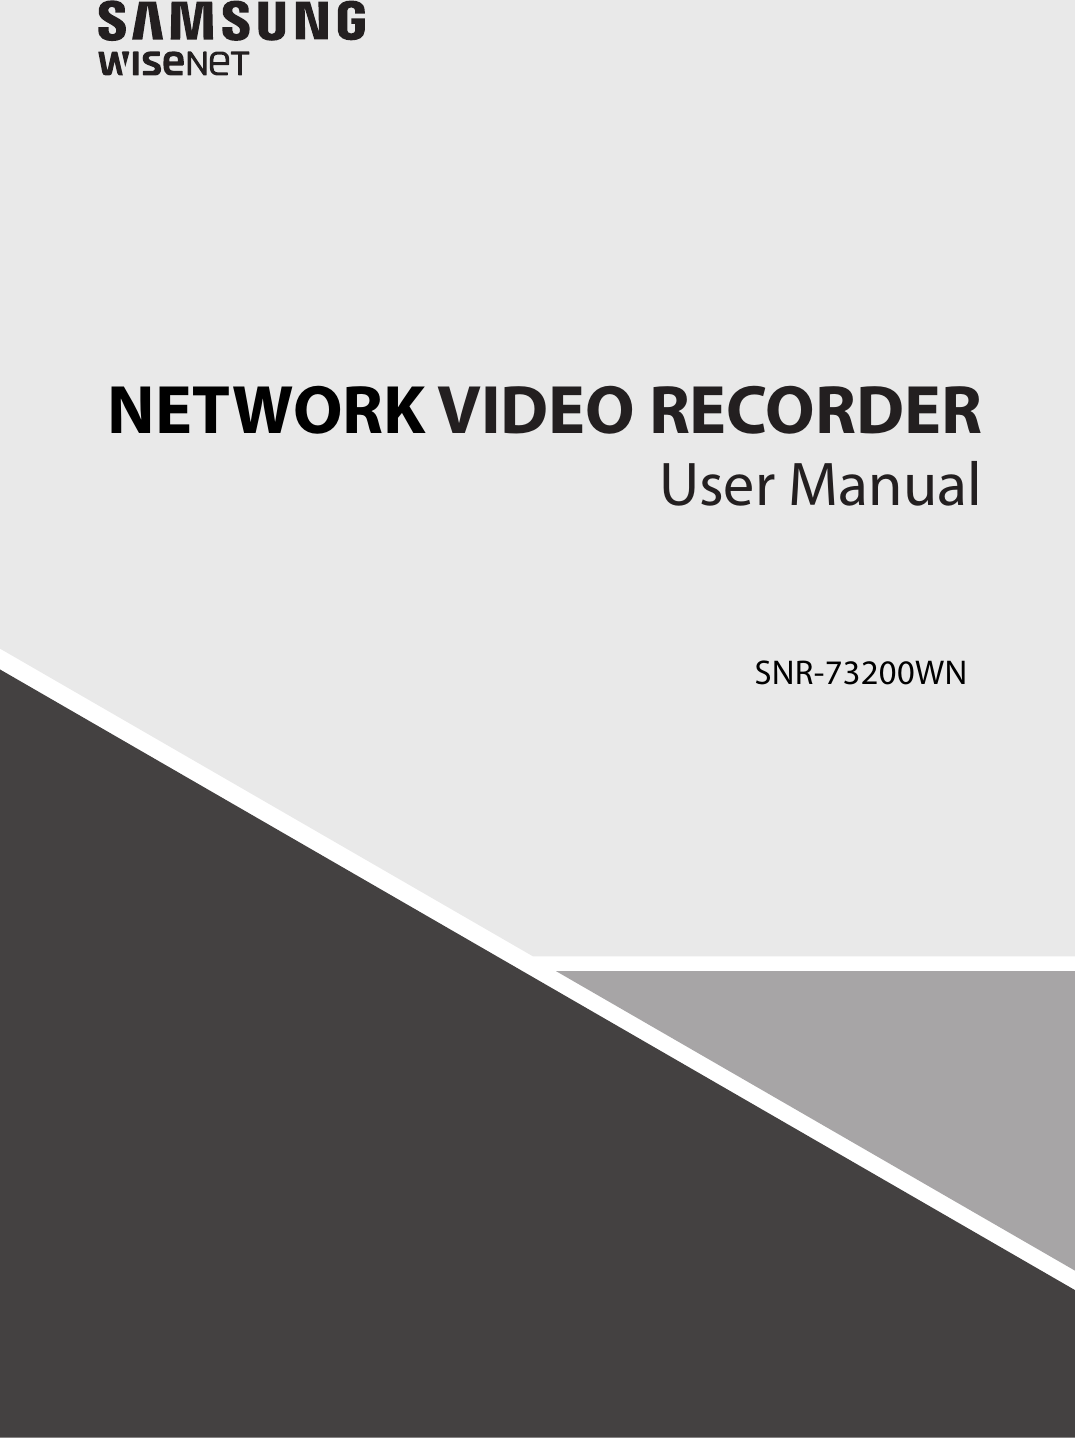 SNR-73200WNNETWORK VIDEO RECORDERUser Manual